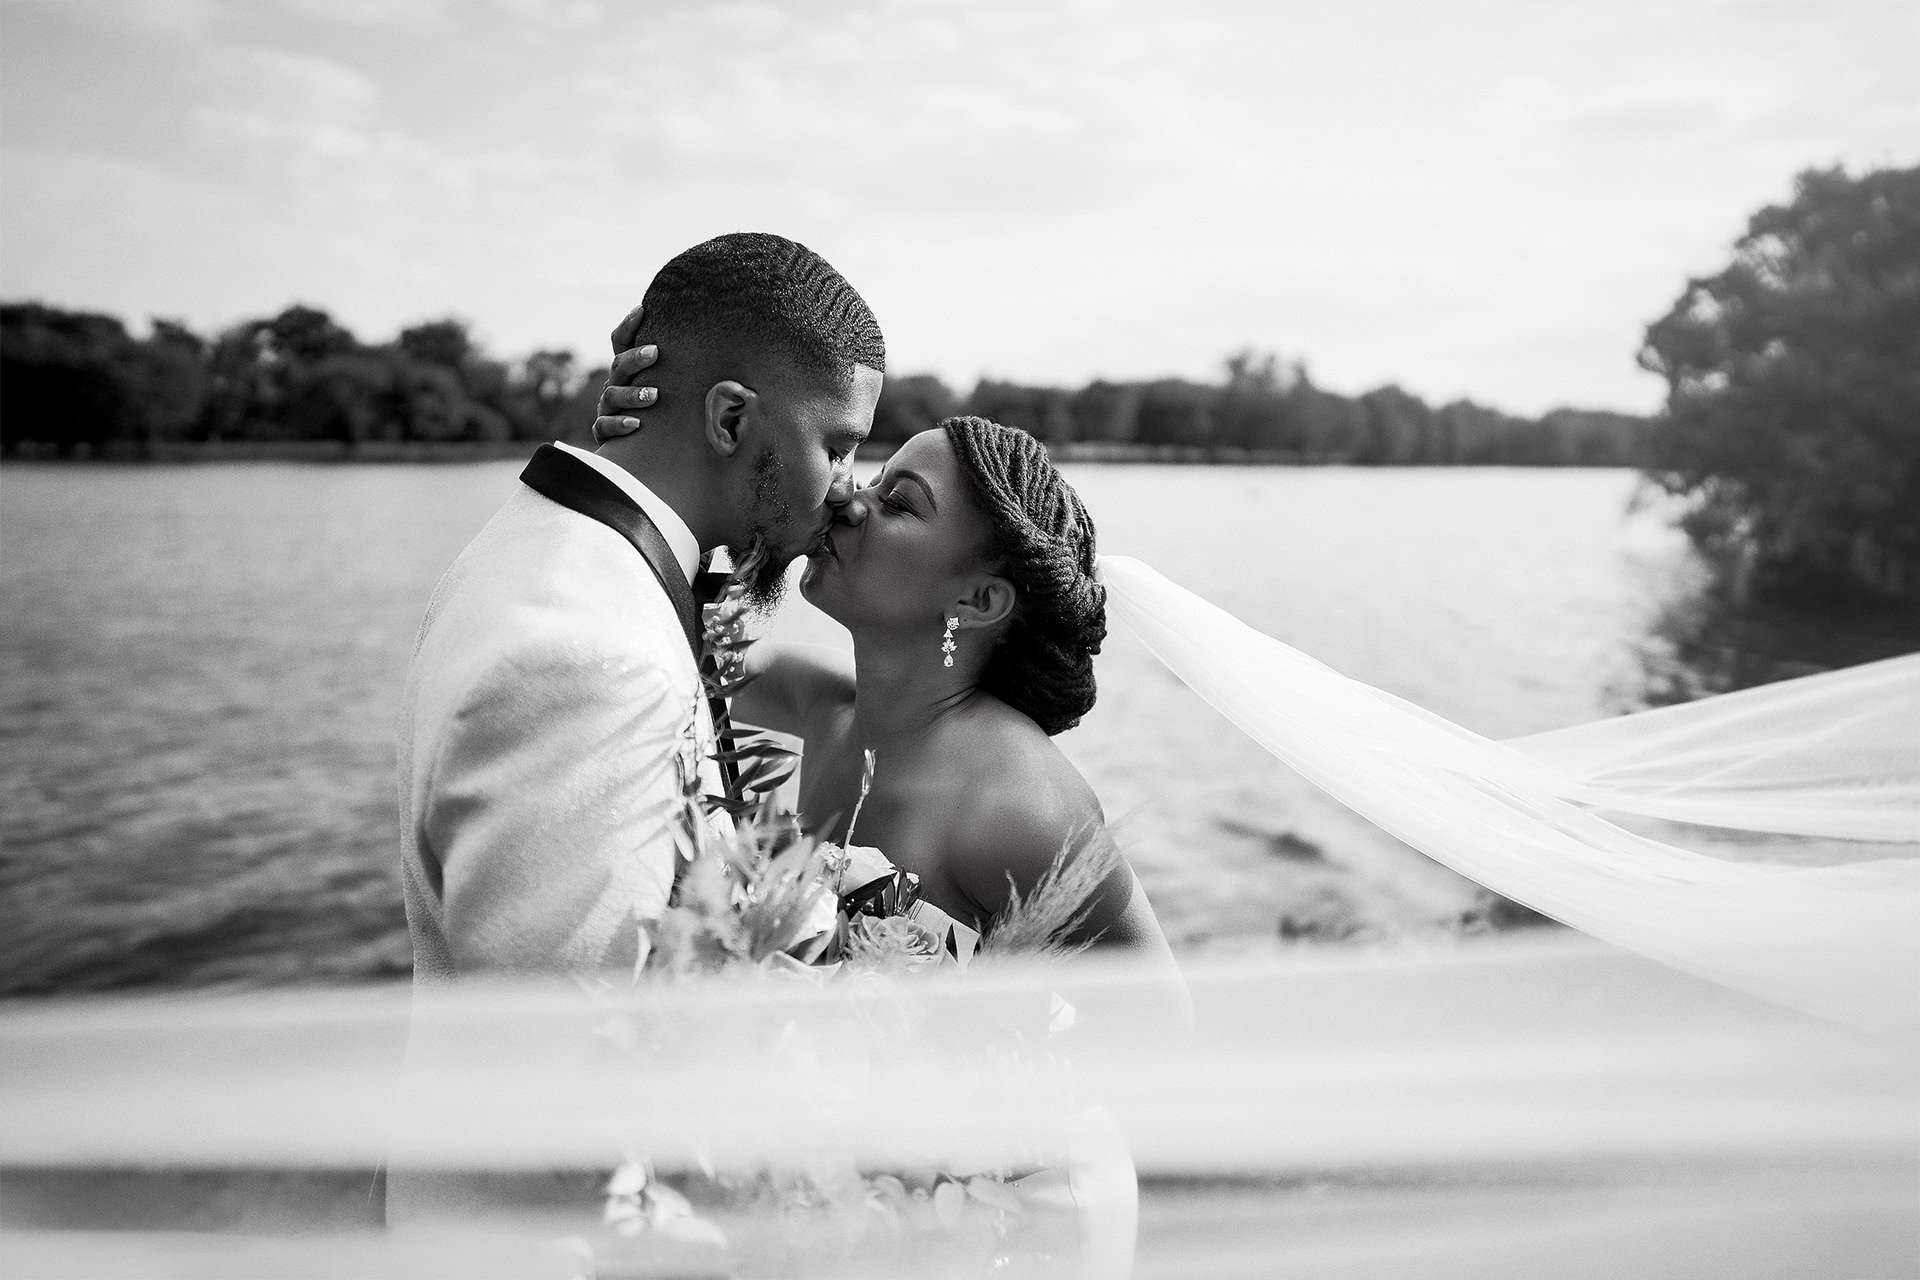 Camden County Boathouse Wedding Photos Bride And Groom Portrait